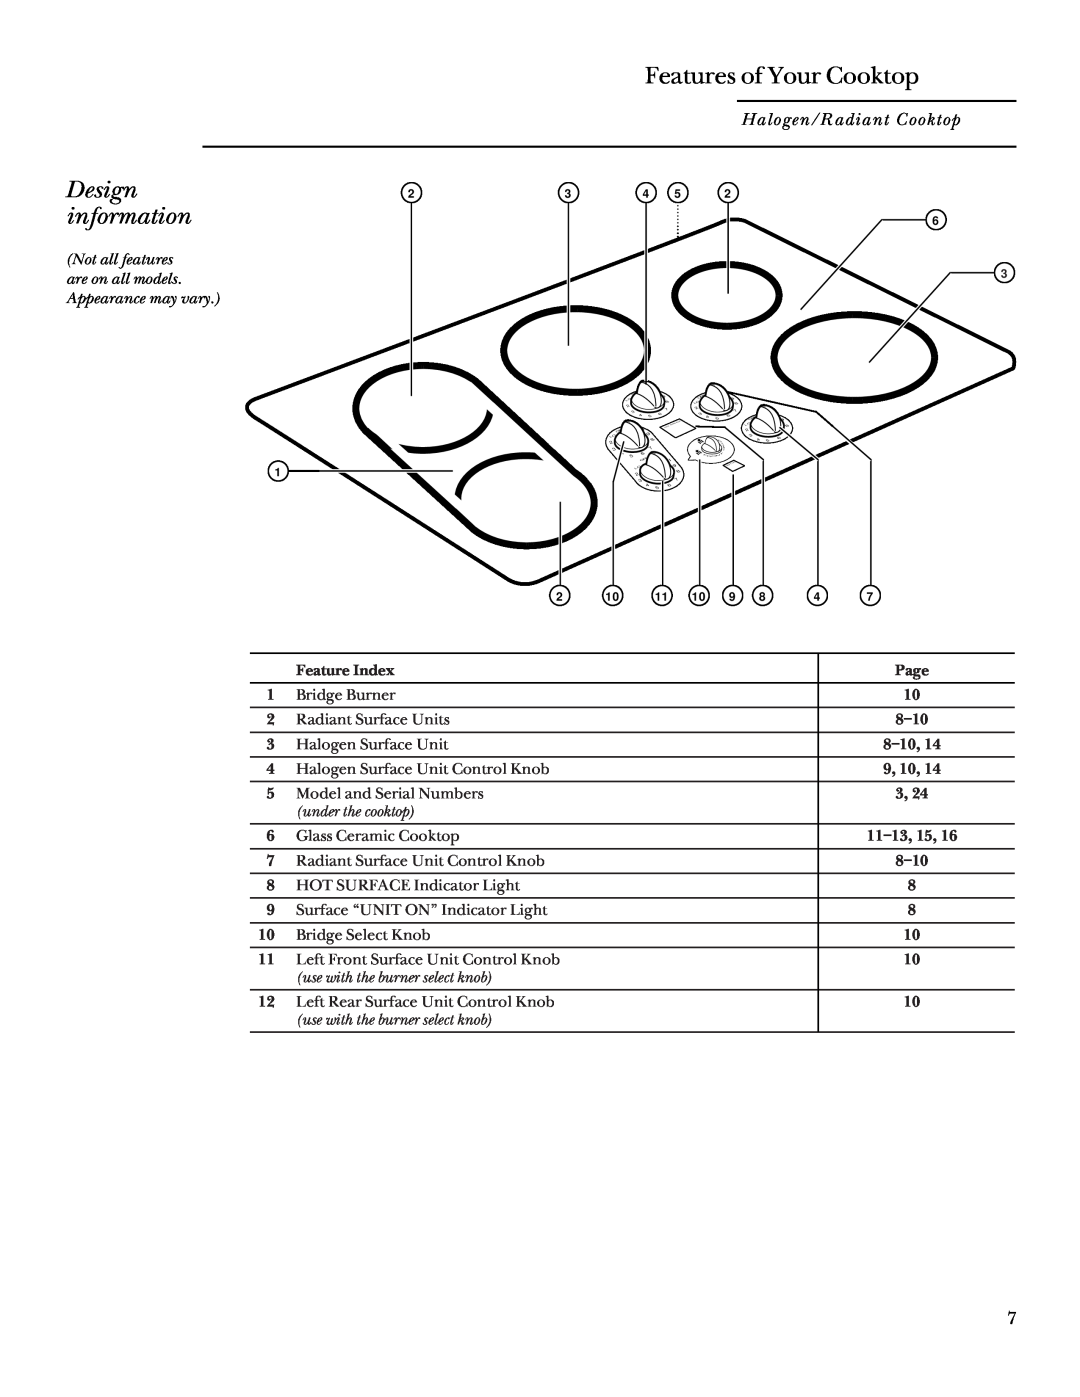 GE Monogram Halogen/Radiant Cooktop manual Features of Your Cooktop, Design information, under the cooktop 